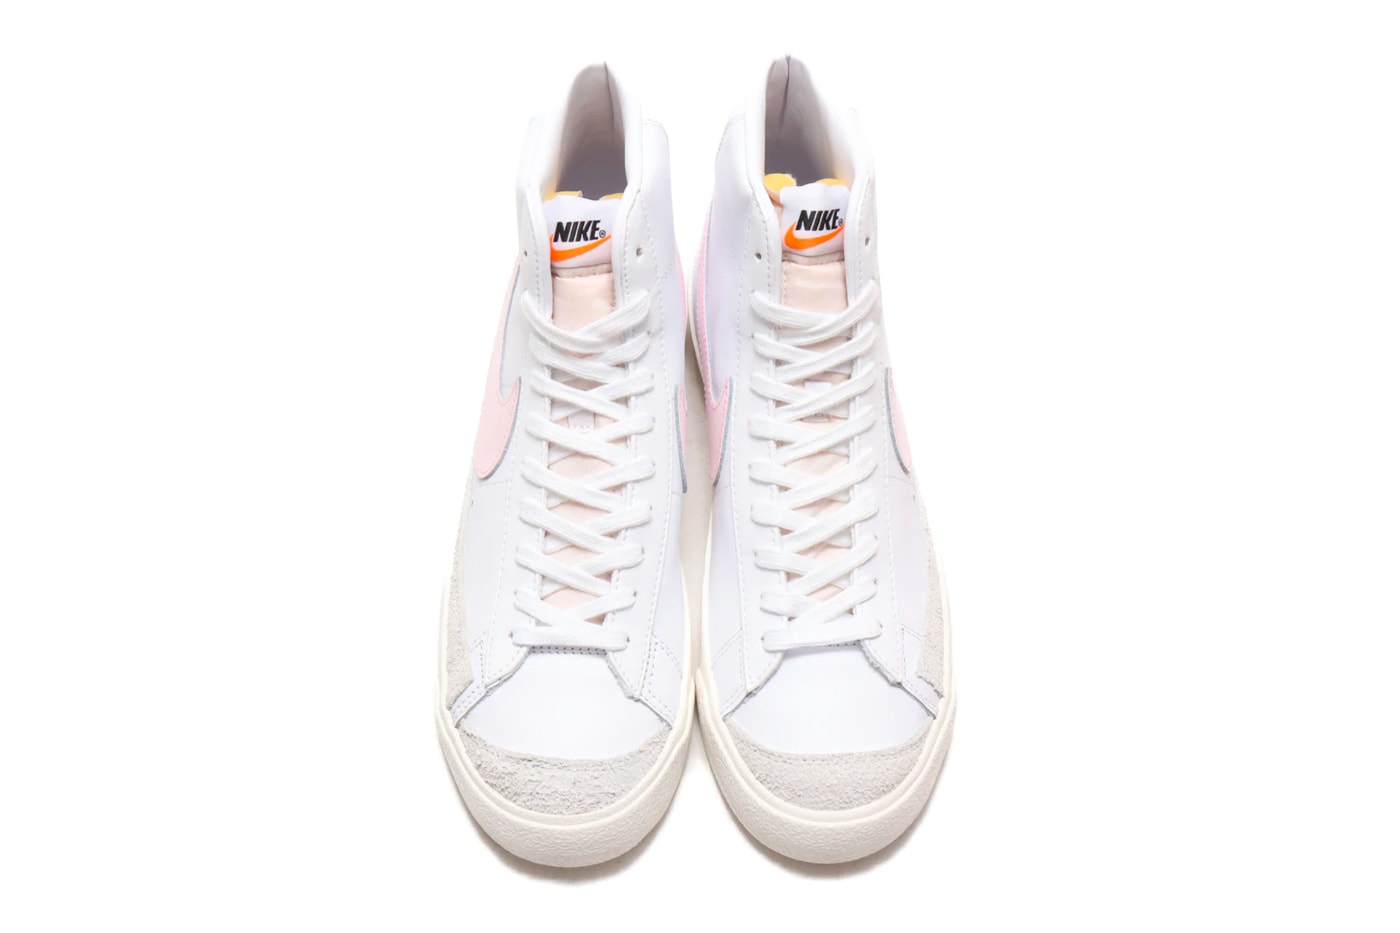 Nike Blazer 77 Mid Vintage White Pink Foam bq6806 108 Sneakers shoes footwear trainers runners kicks spring summer 2020 collection menswear streetwear